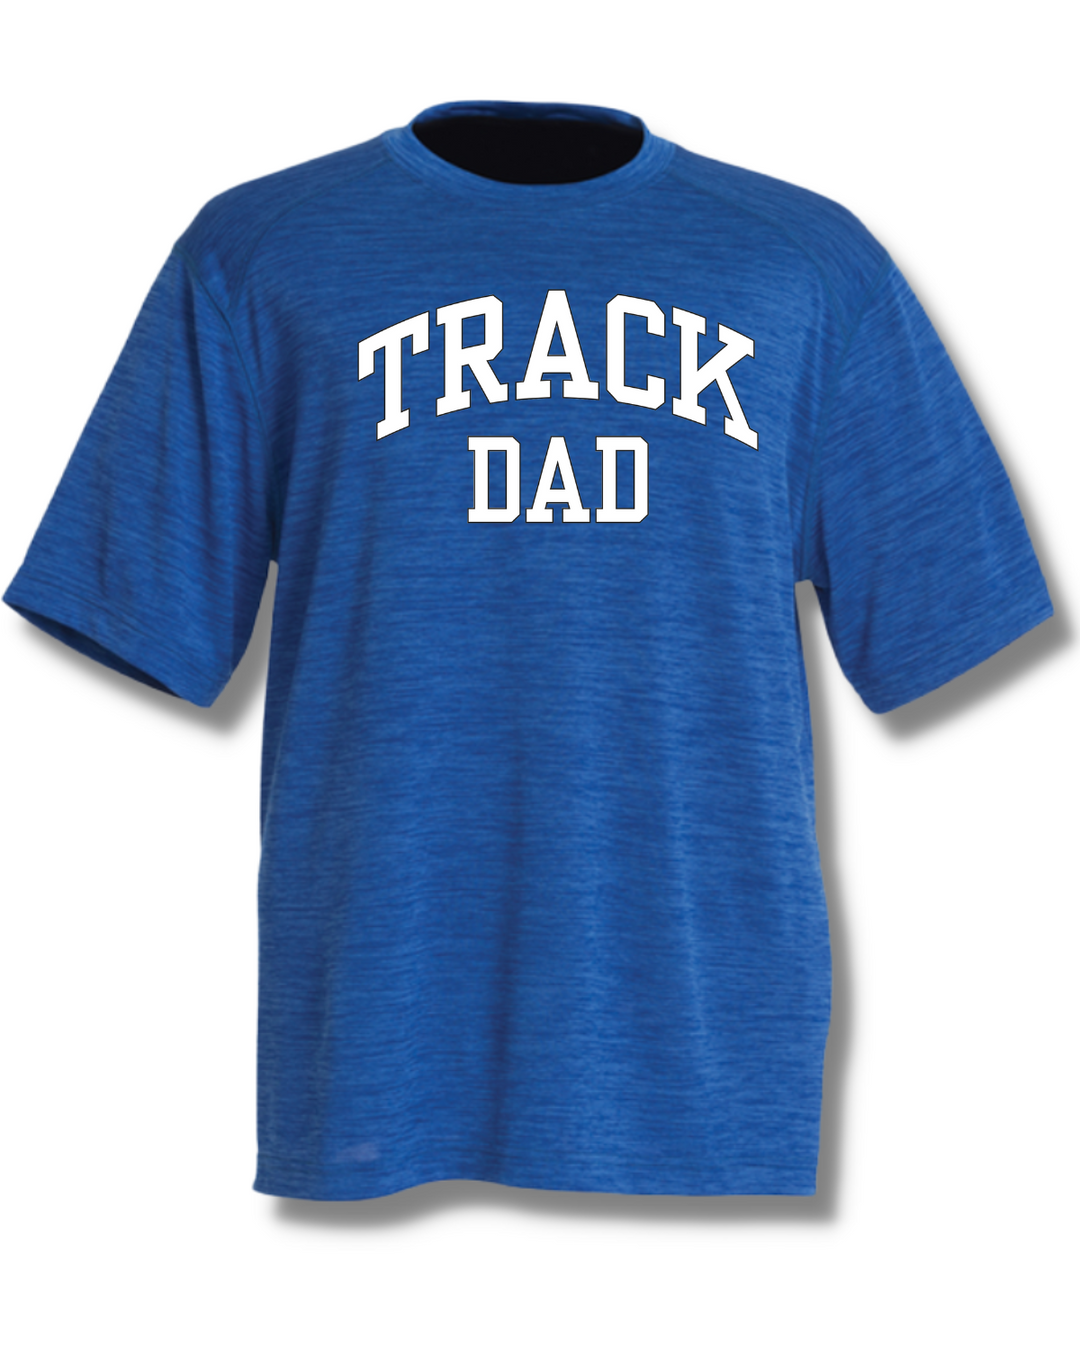 Track Dad Mens Space Dye Performance Tee (3764)